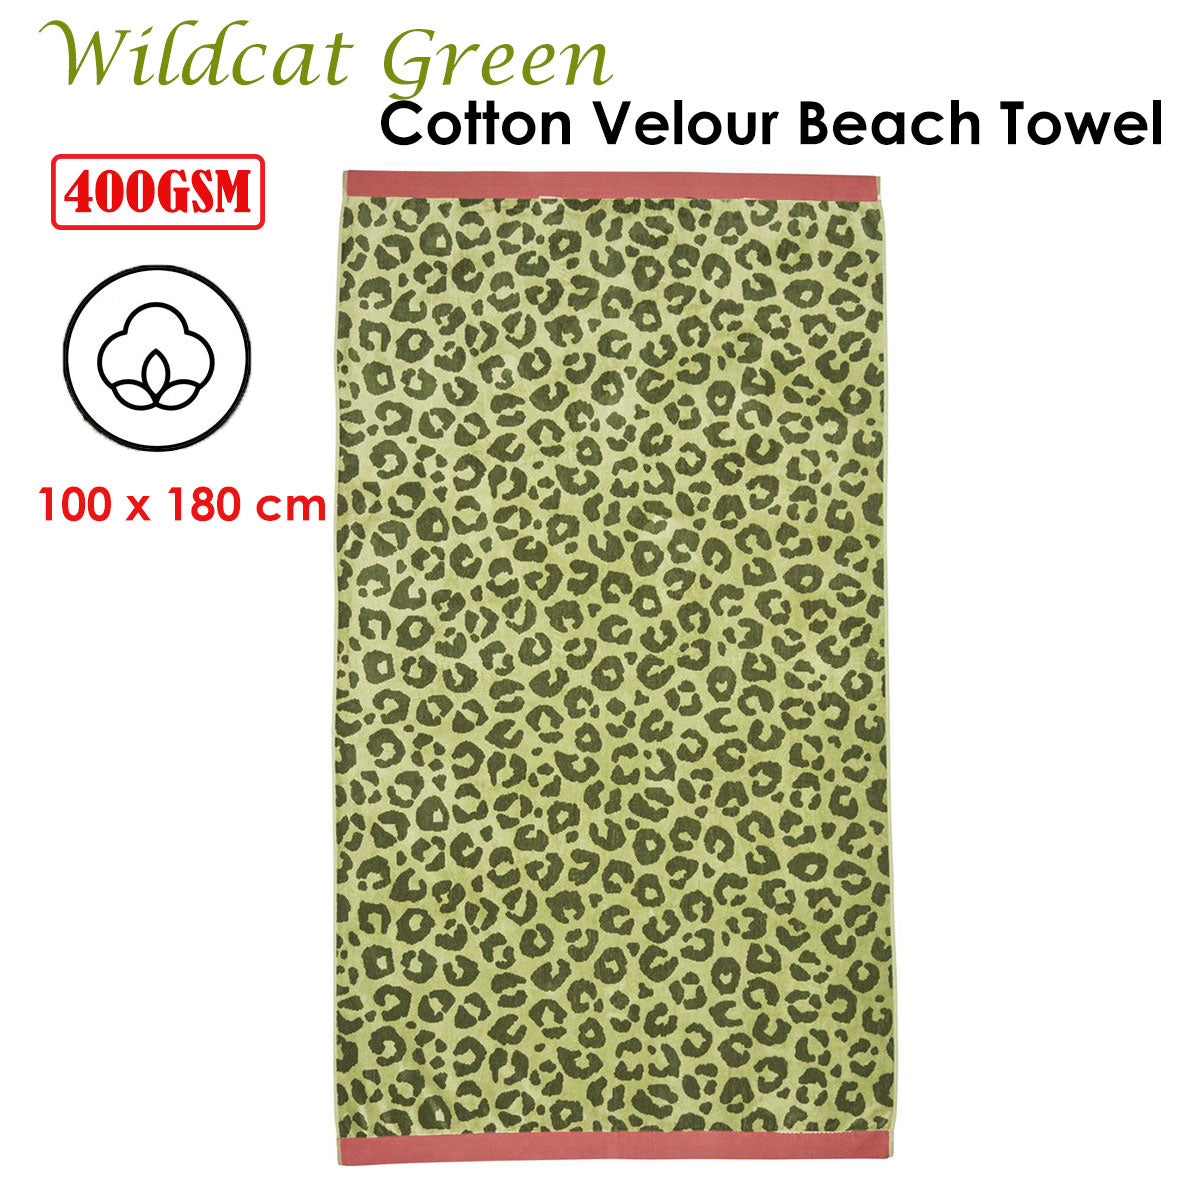 Bedding House Wildcat Green Cotton Velour Beach Towel - Beach Towels - Zanlana Design and Home Decor